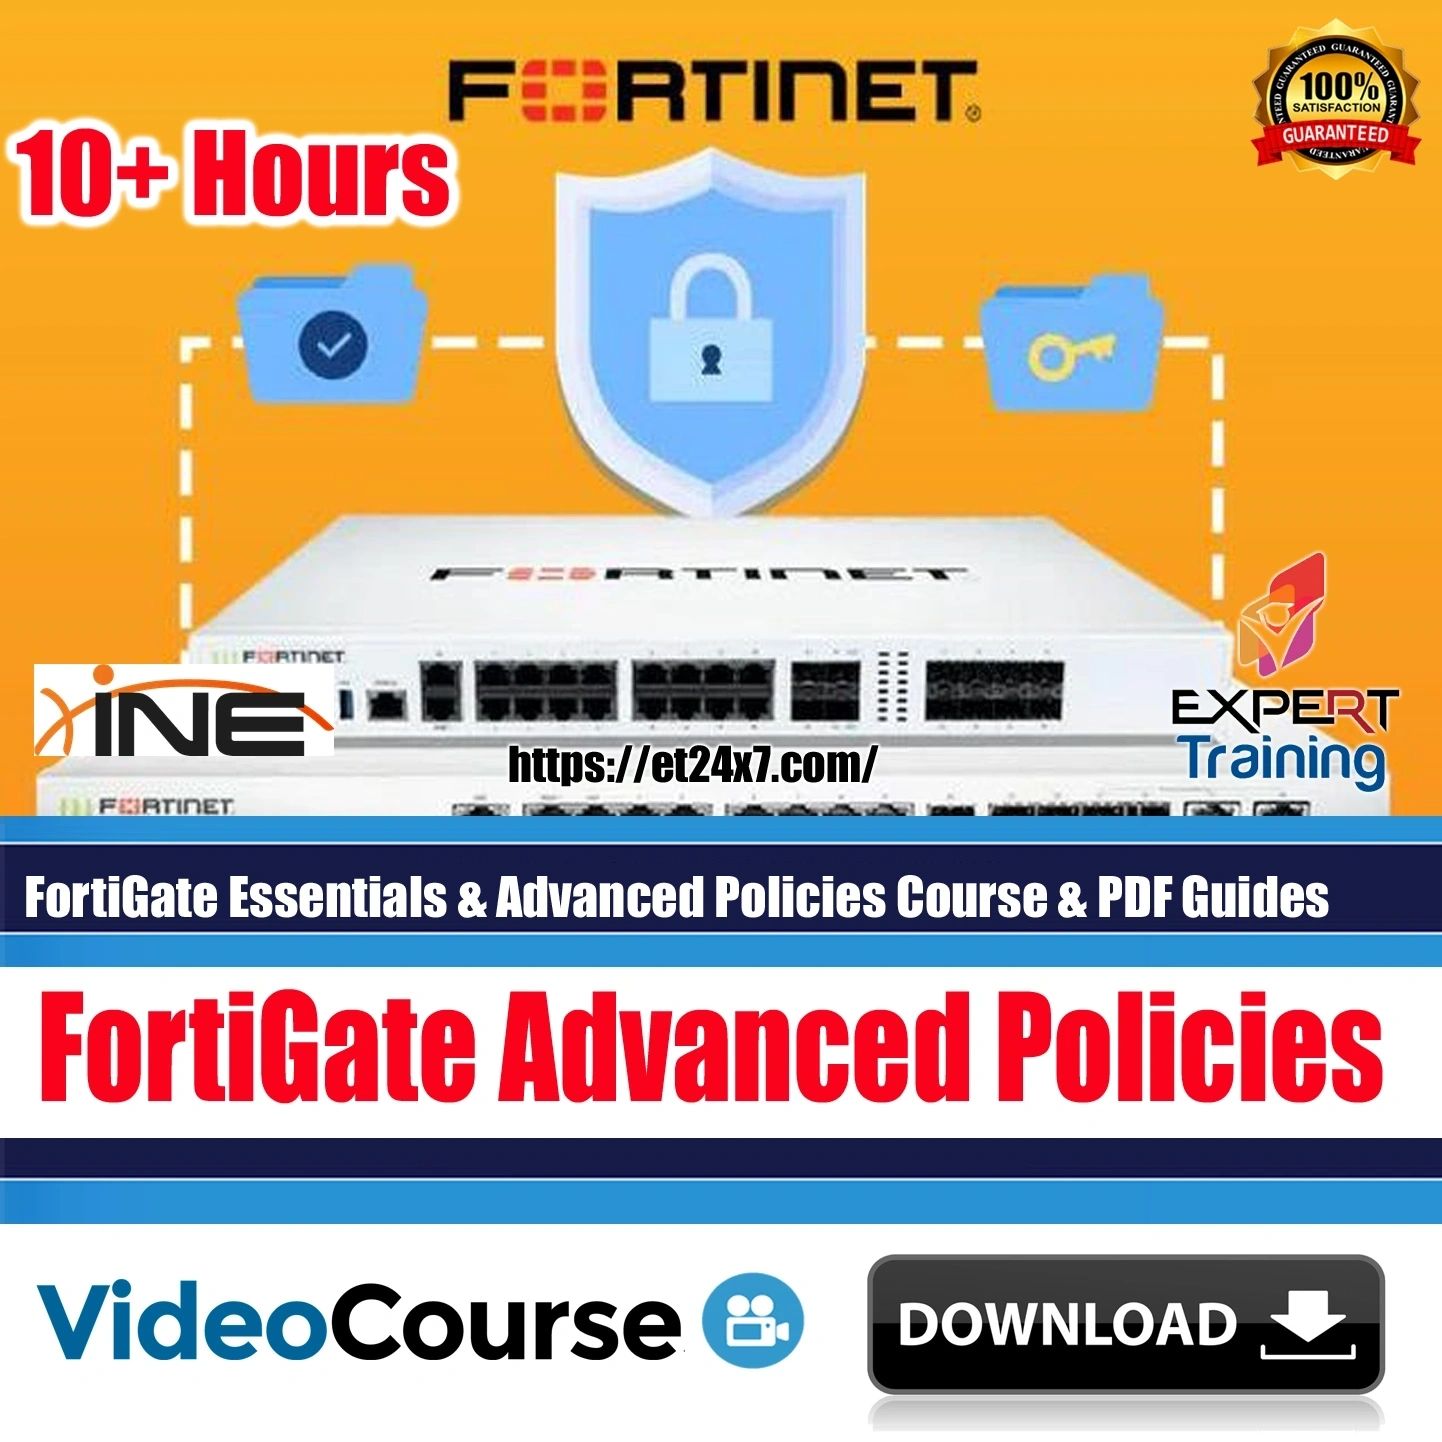 FortiGate Essentials & Advanced Policies Course & PDF Guides